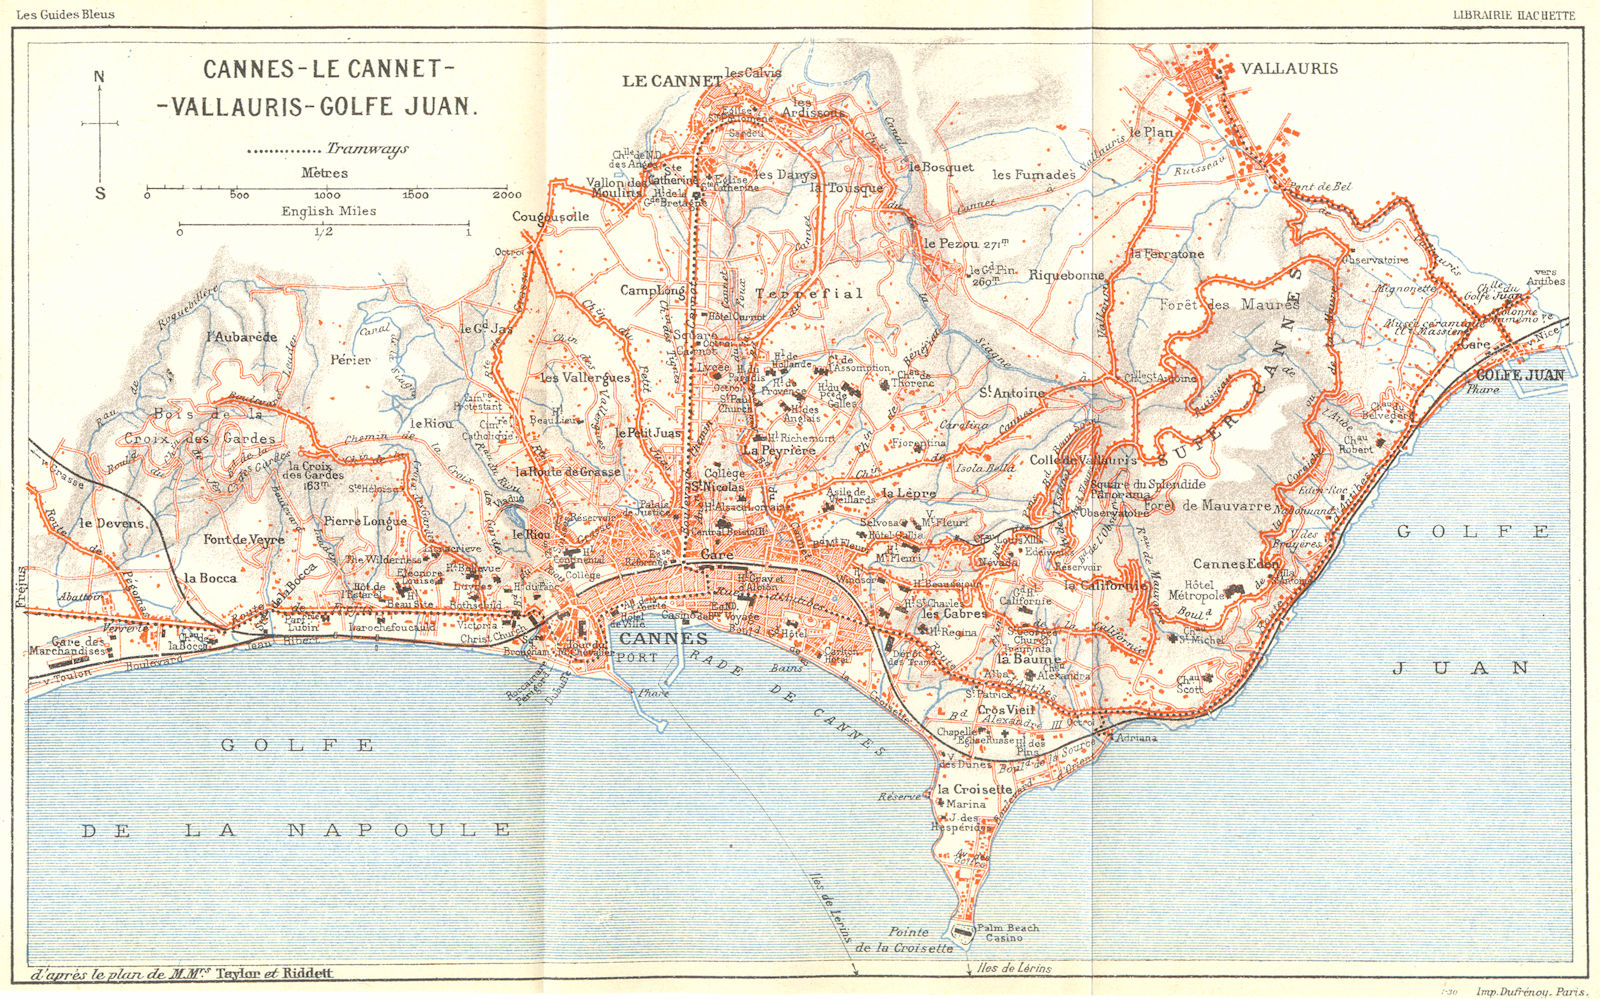 FRANCE. Cannes-Le Cannet-Vallauris-Golfe Juan 1926 old vintage map plan chart